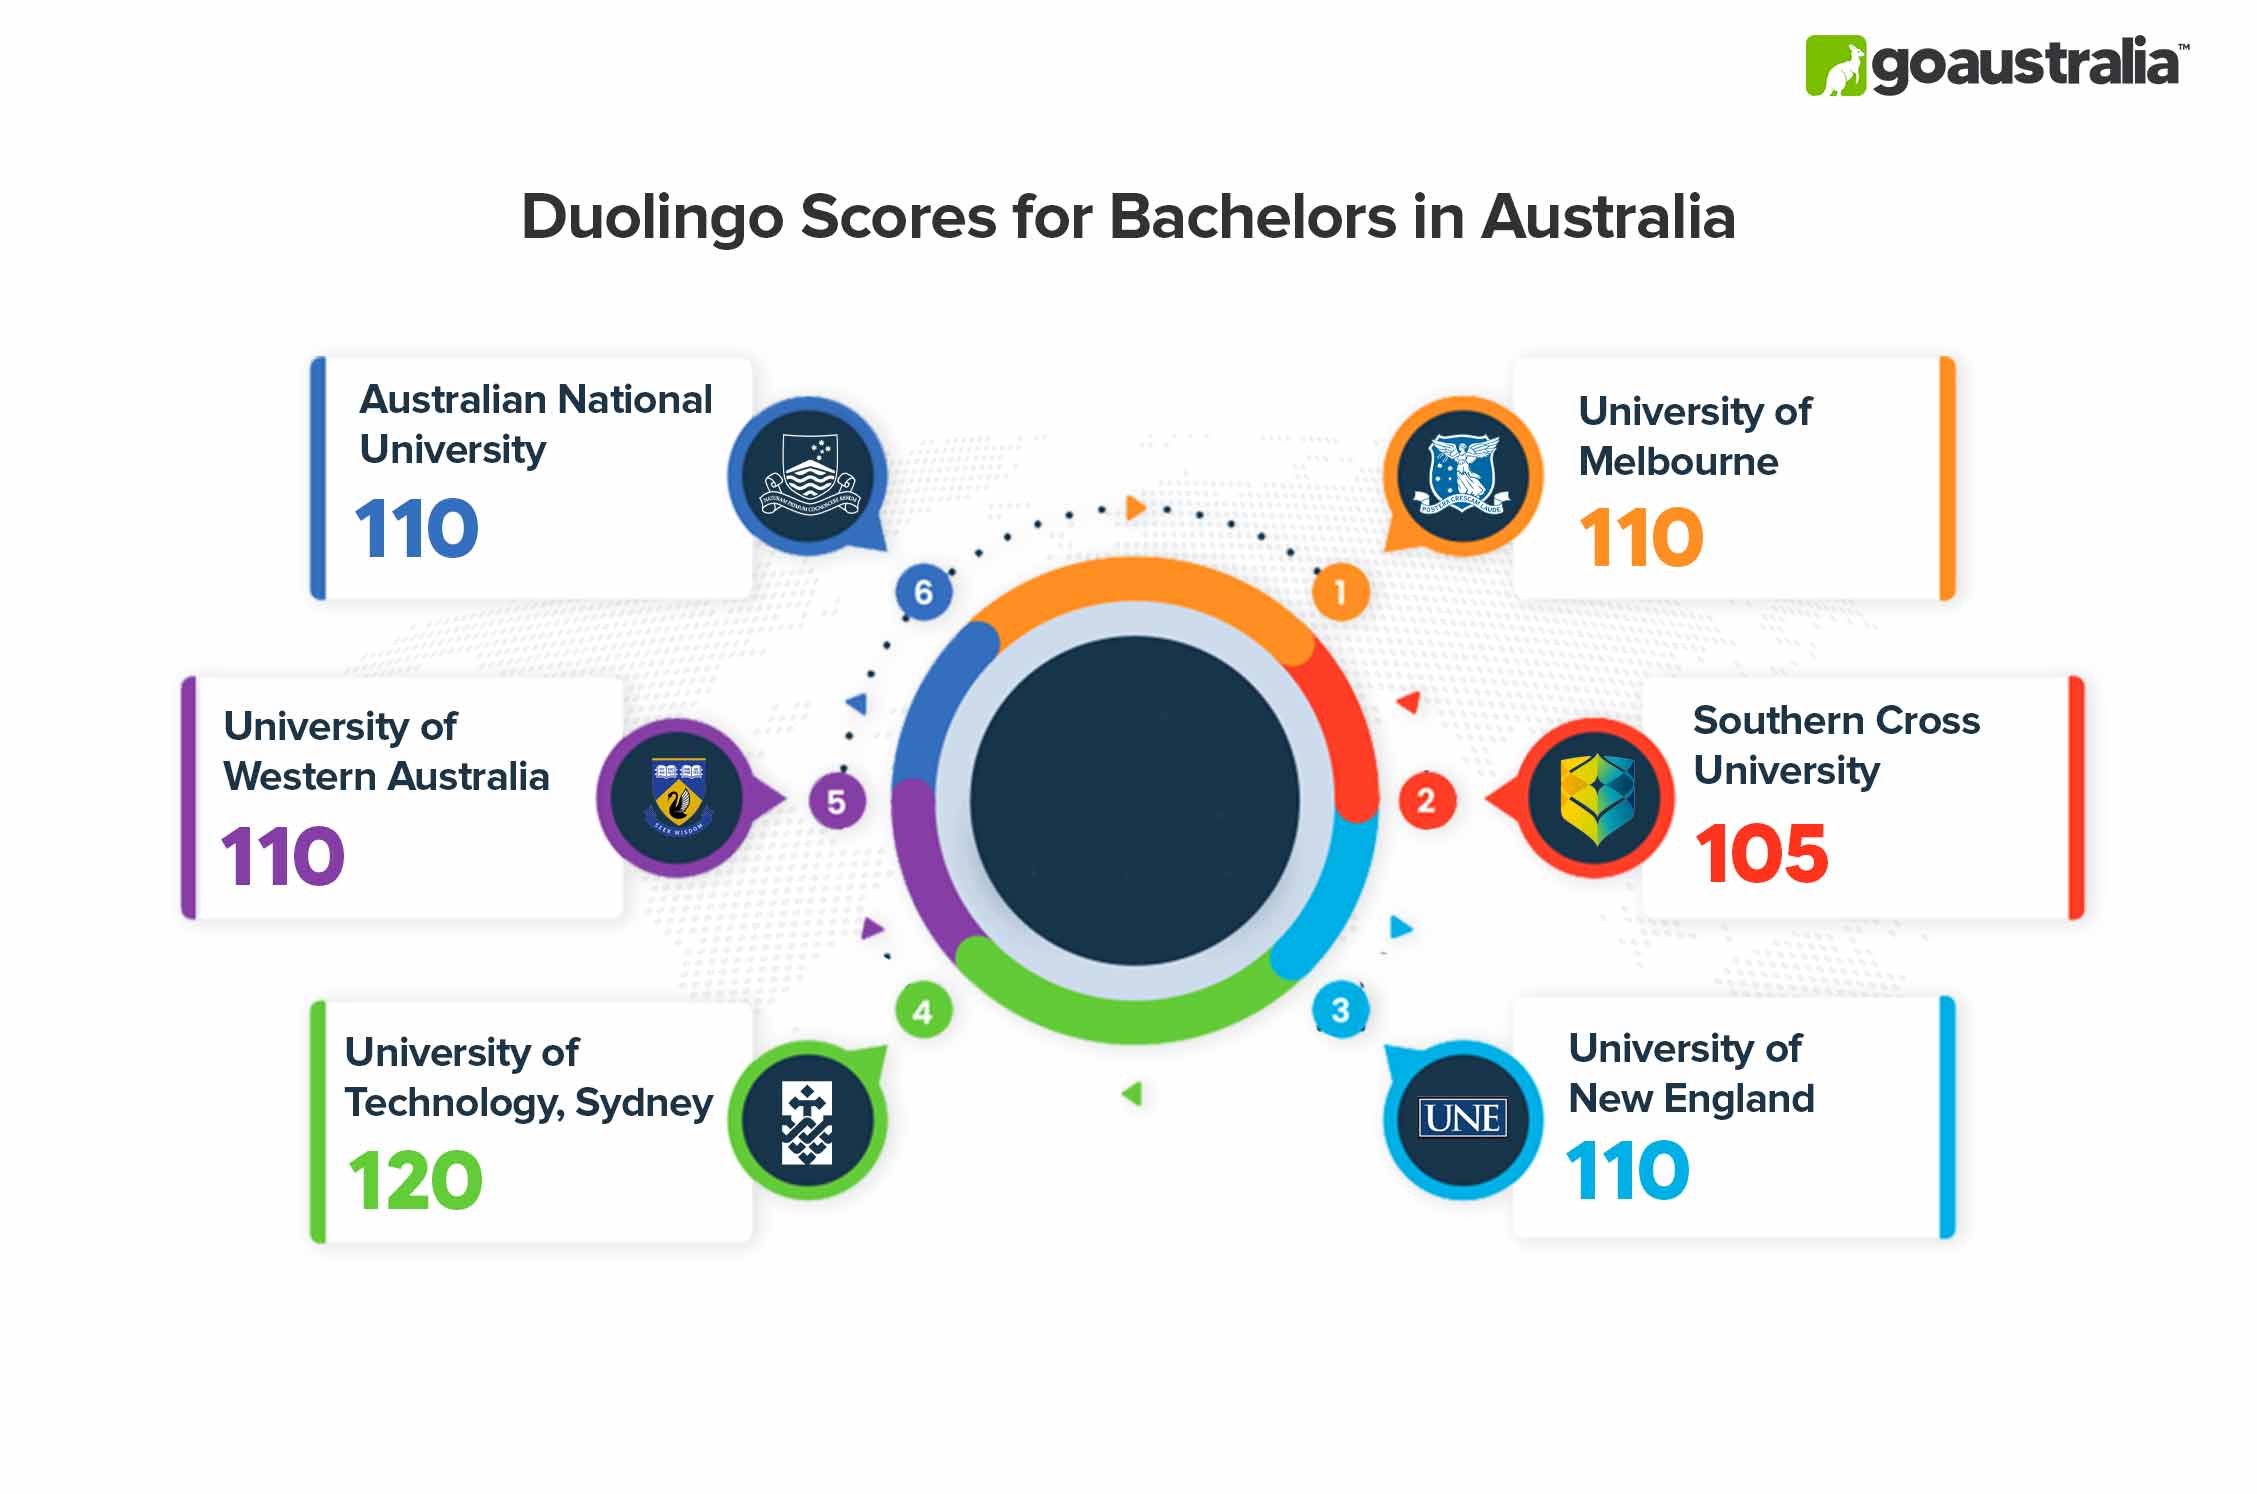 Bachelors in Australia Duolingo Score